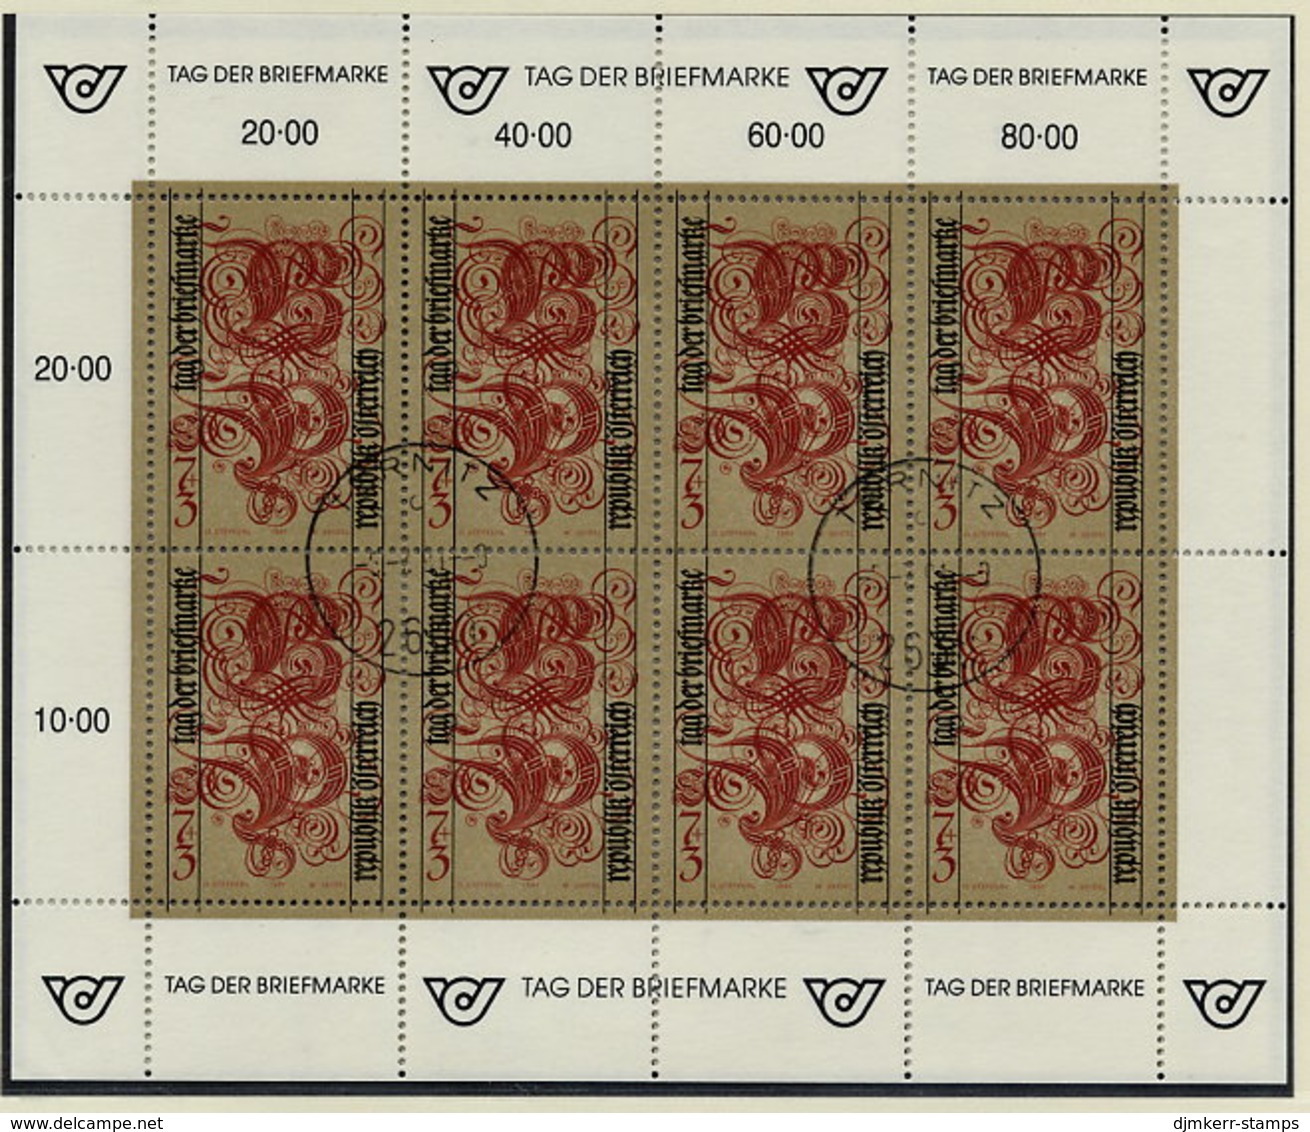 AUSTRIA 1991 Stamp Day Sheetlet, Postally Used On Registered Card.  Michel 2032 Kb - Blocs & Feuillets